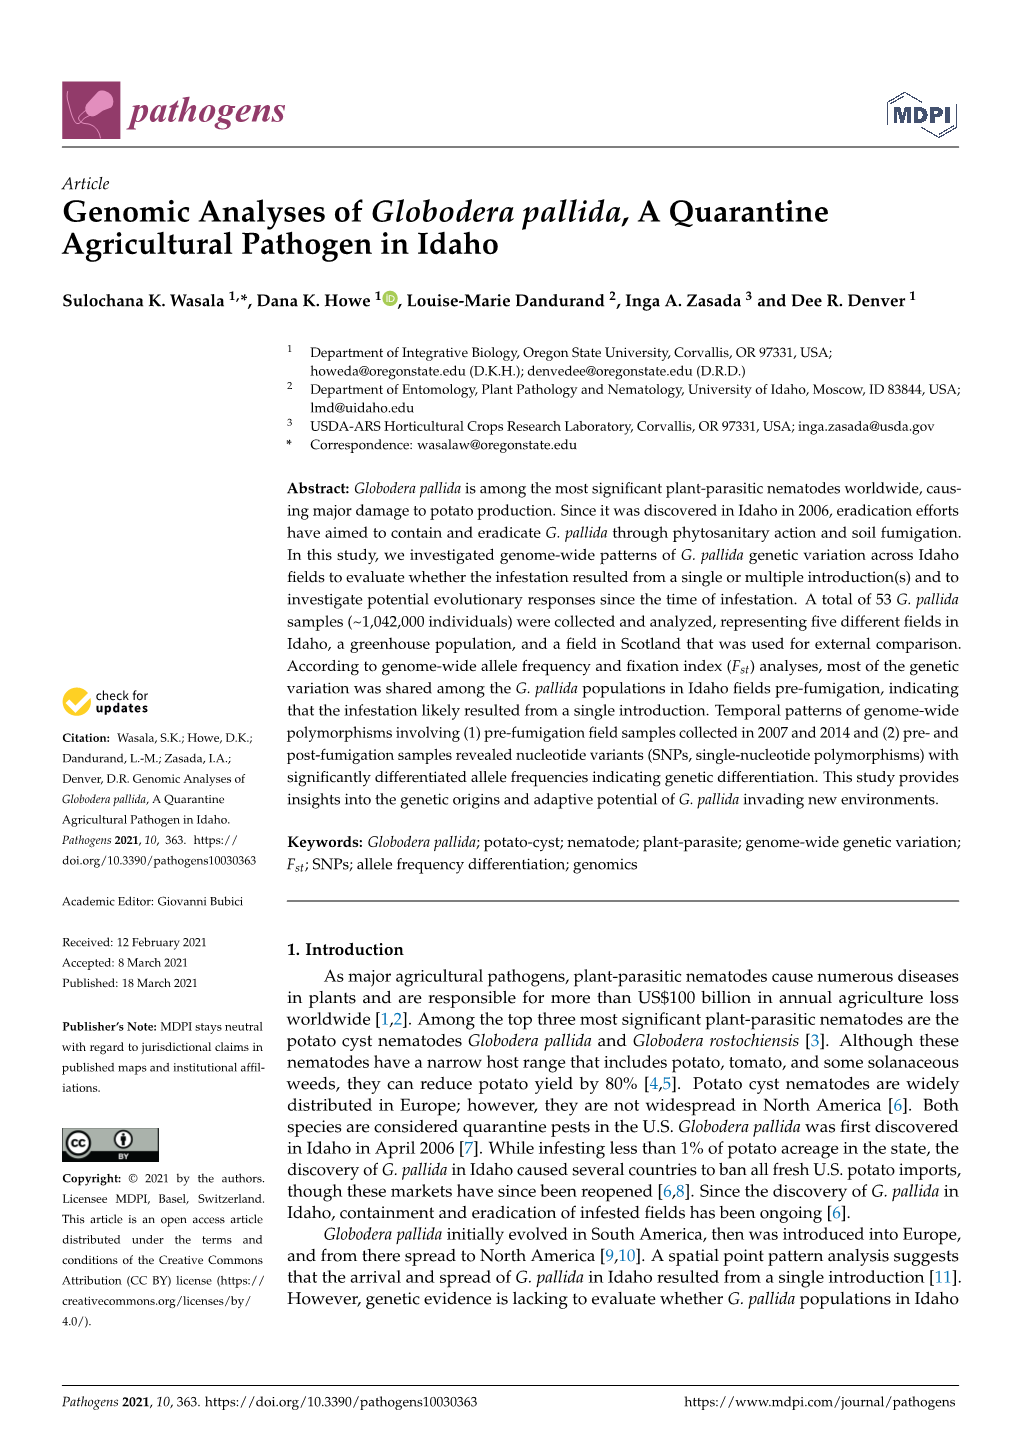 Genomic Analyses of Globodera Pallida, a Quarantine Agricultural Pathogen in Idaho